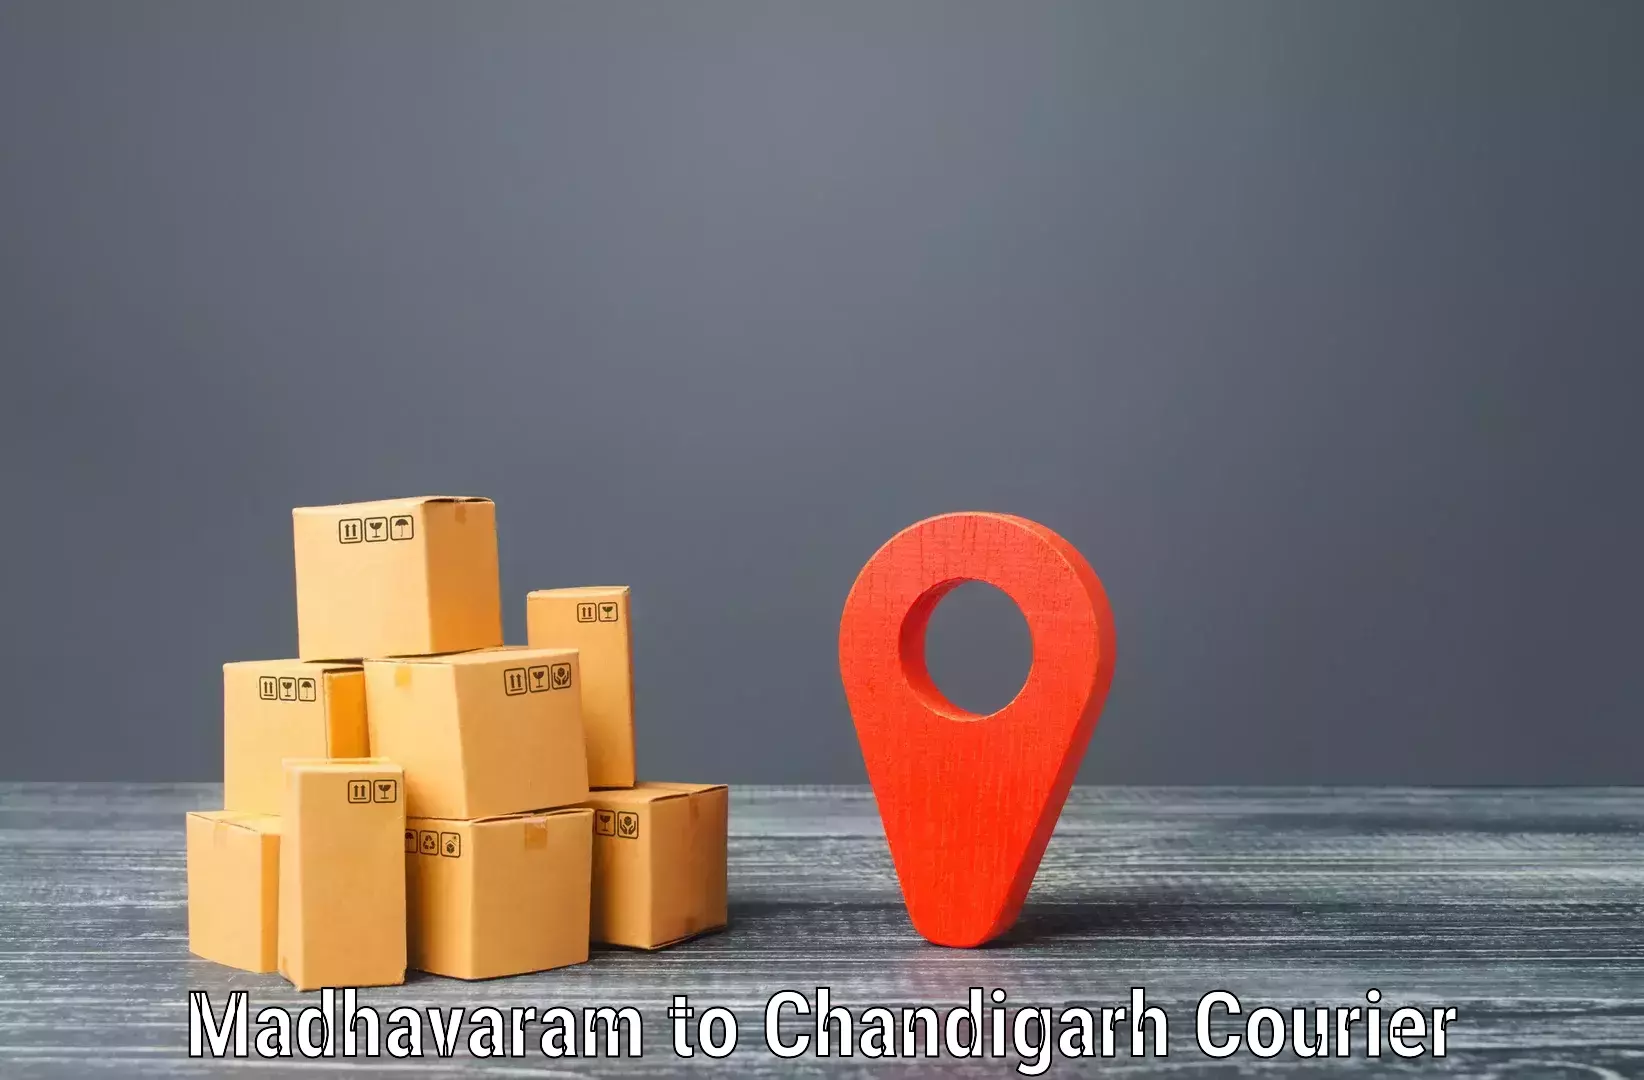 Express delivery capabilities Madhavaram to Chandigarh